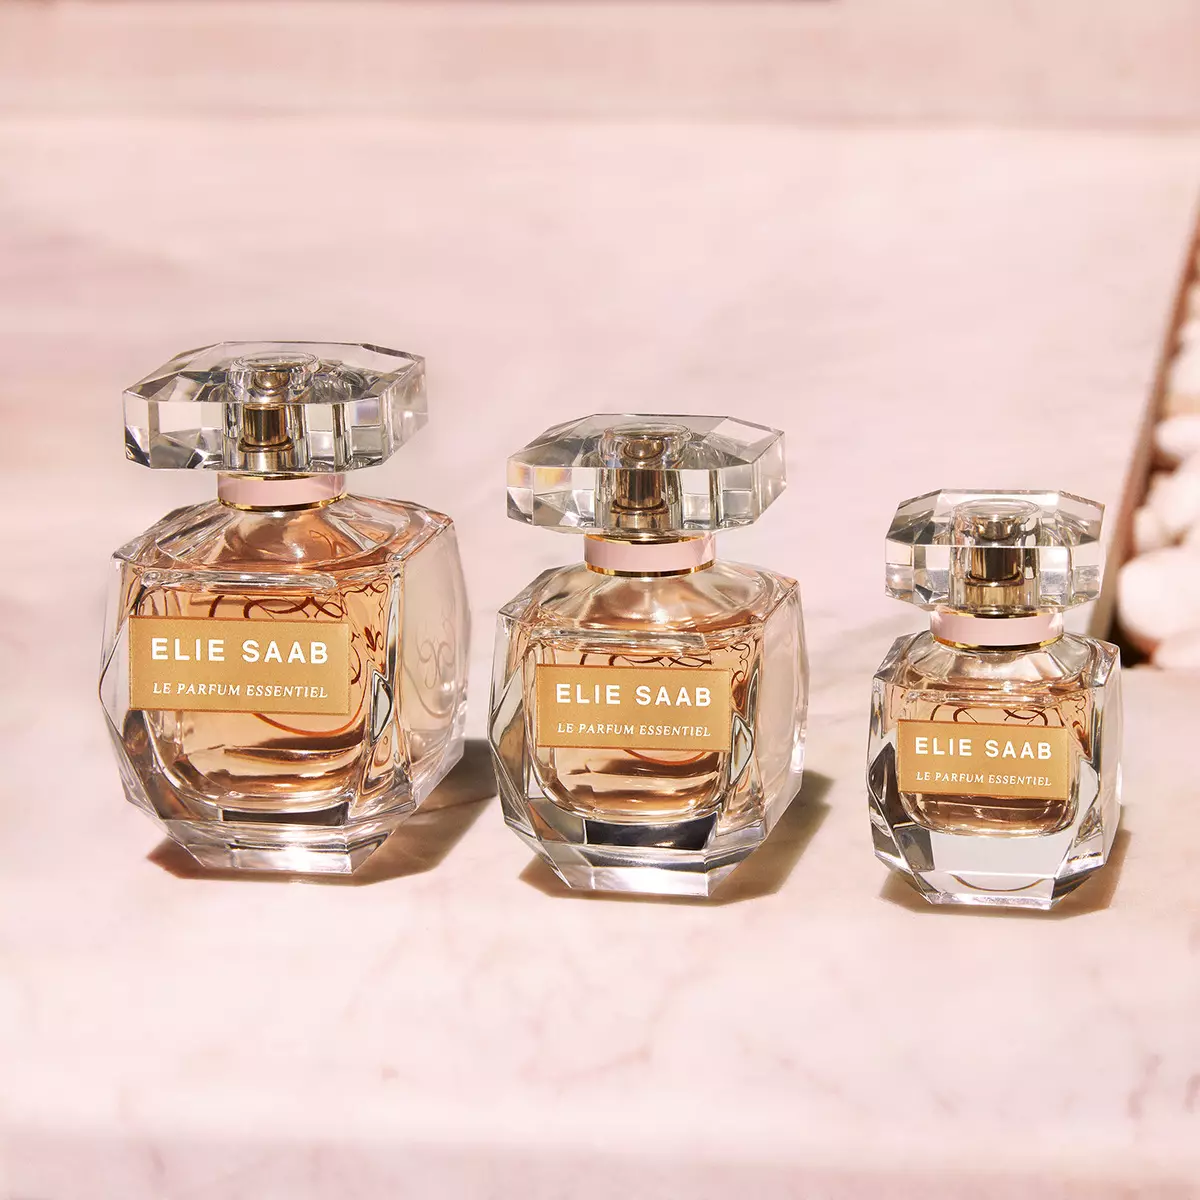 Perfum Elie Saab: Τα πνεύματα Le Parfum Royal, Le Parfum Essentiel, κορίτσι τώρα, Le Parfum σε λευκό και τουαλέτα Water Rose Couture, σχόλια 25329_2